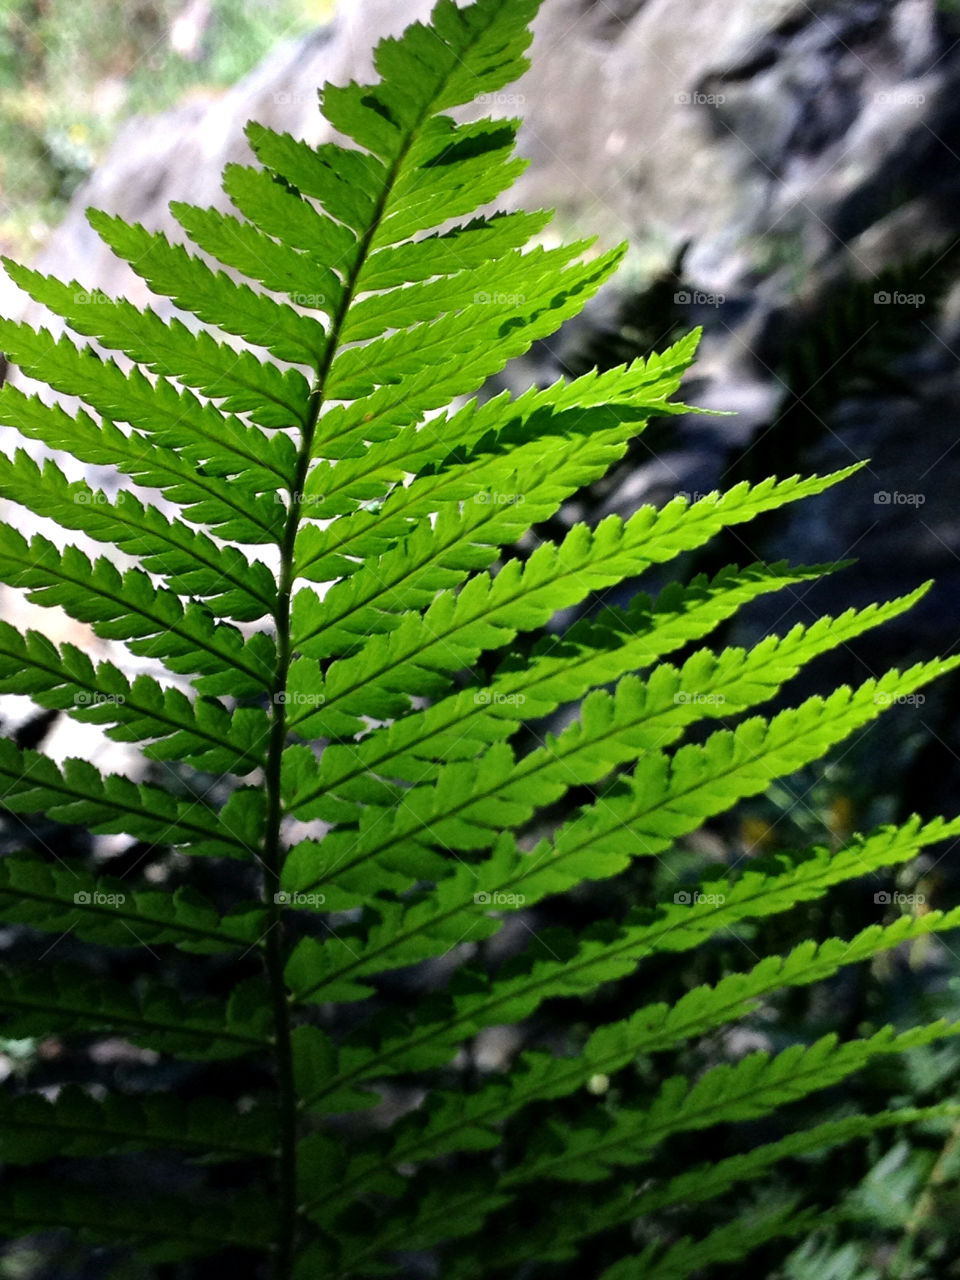 Close-up of a fern leaf